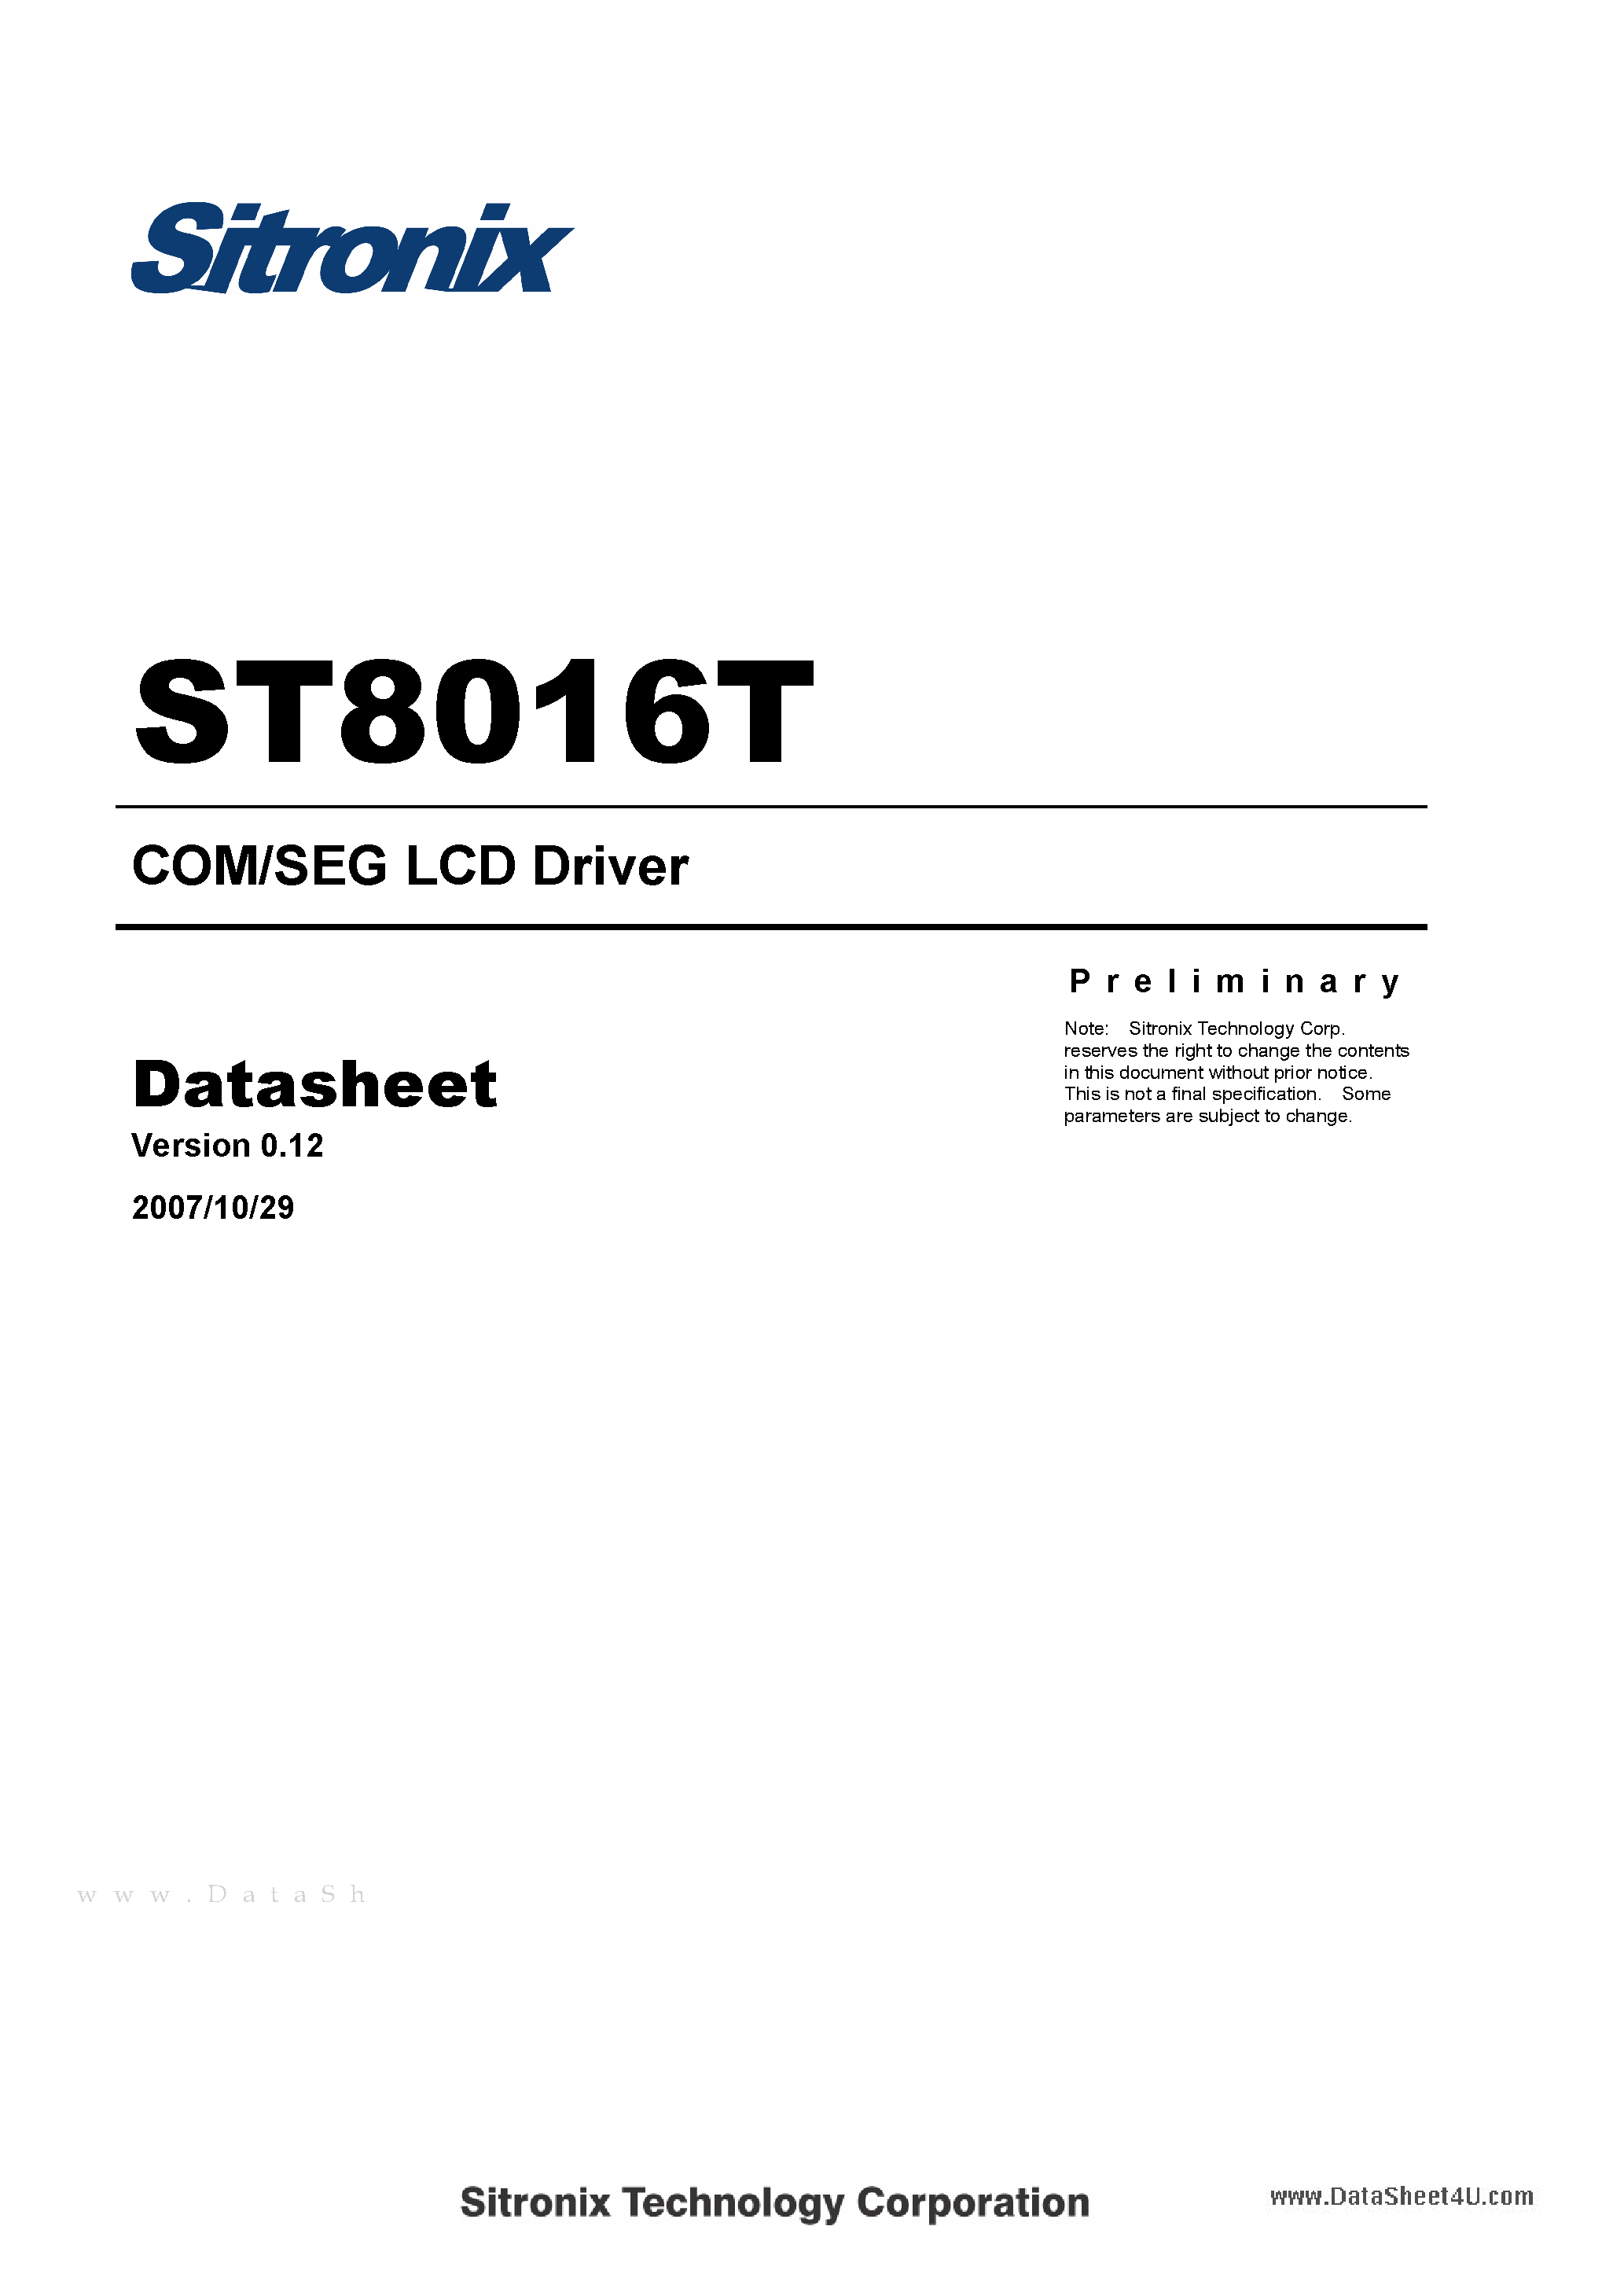 Datasheet ST8016T - COM/SEG LCD Driver page 1